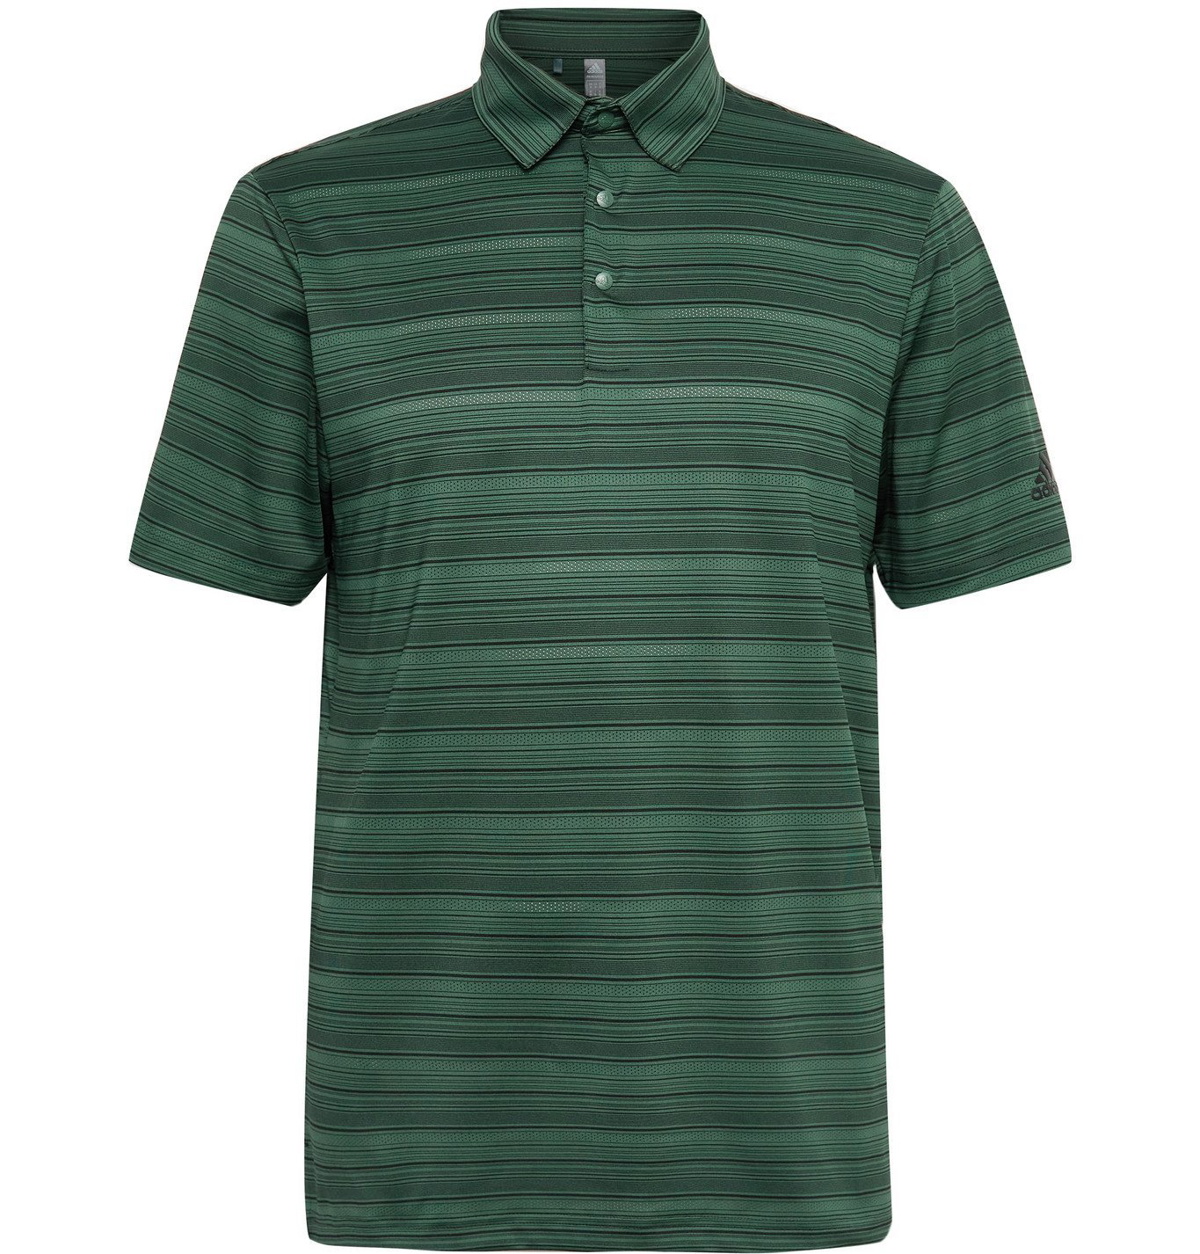 ADIDAS GOLF - Striped Recycled Stretch-Jersey Mesh Golf Polo Shirt Green adidas Golf